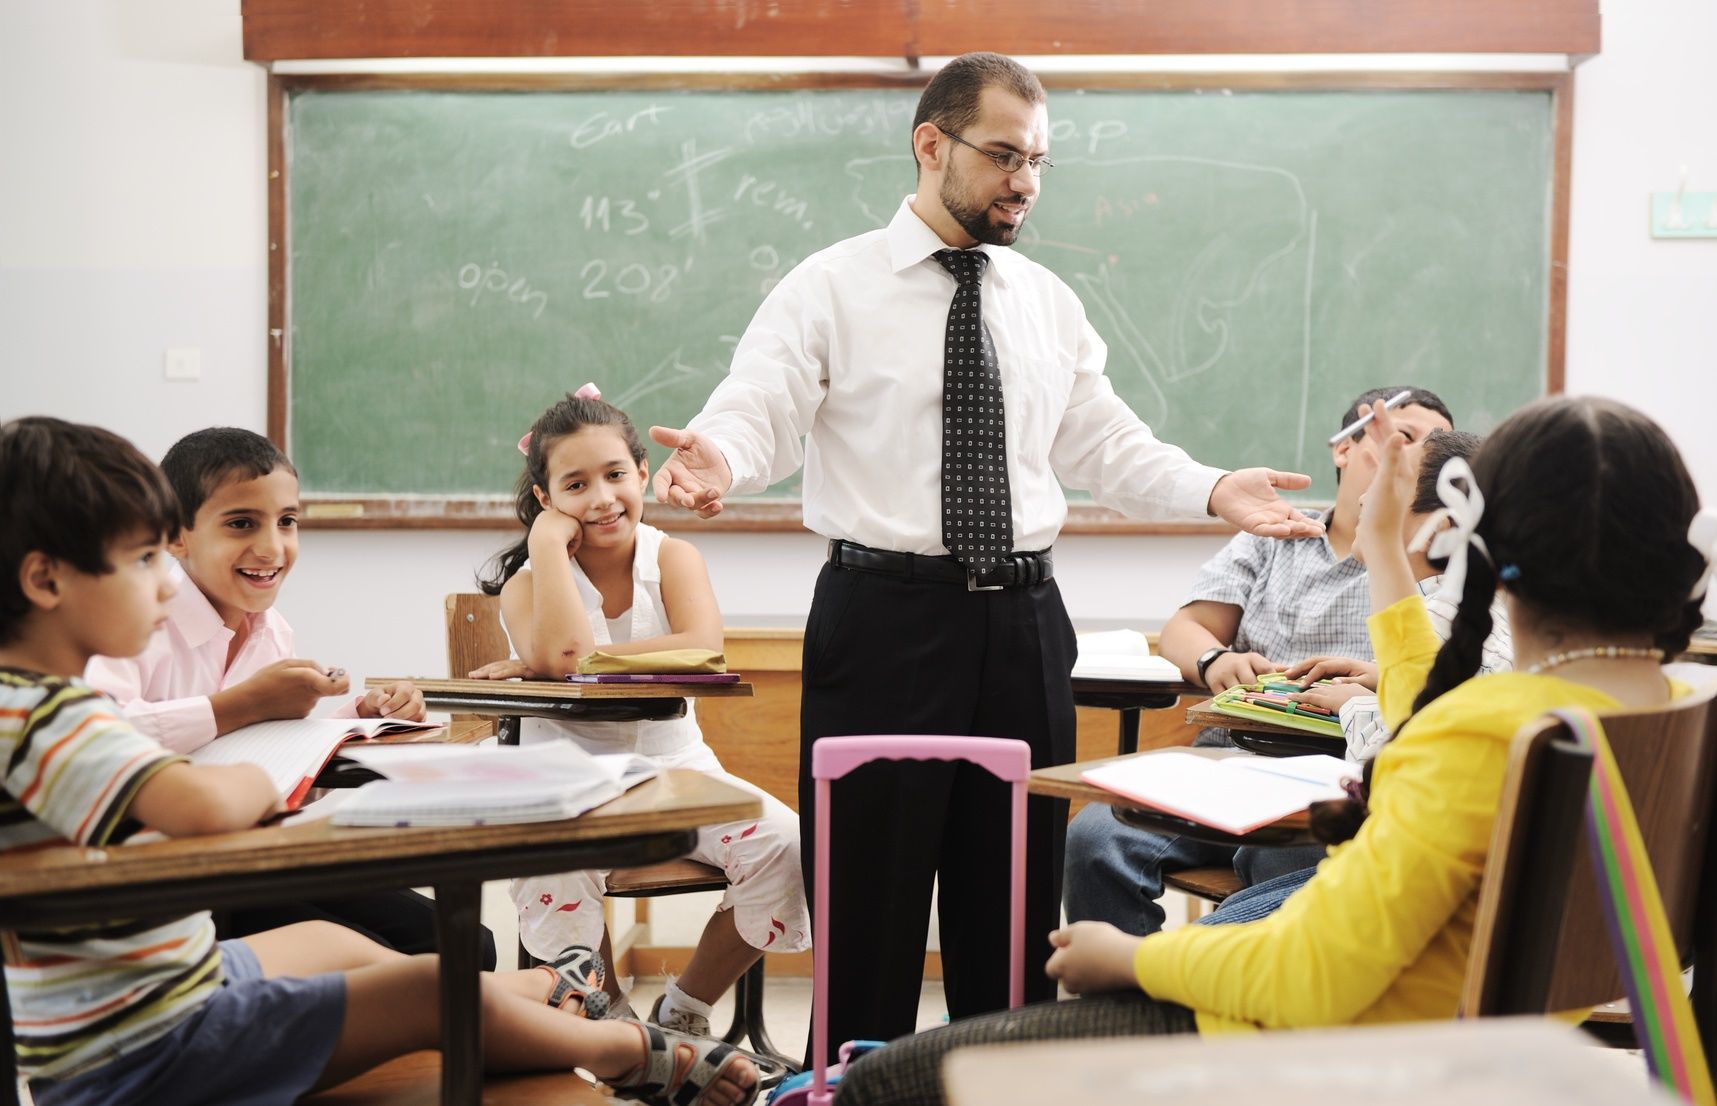 advice_for_teachers_to_help_prevent_misbehavior_in_their_classroom.jpg